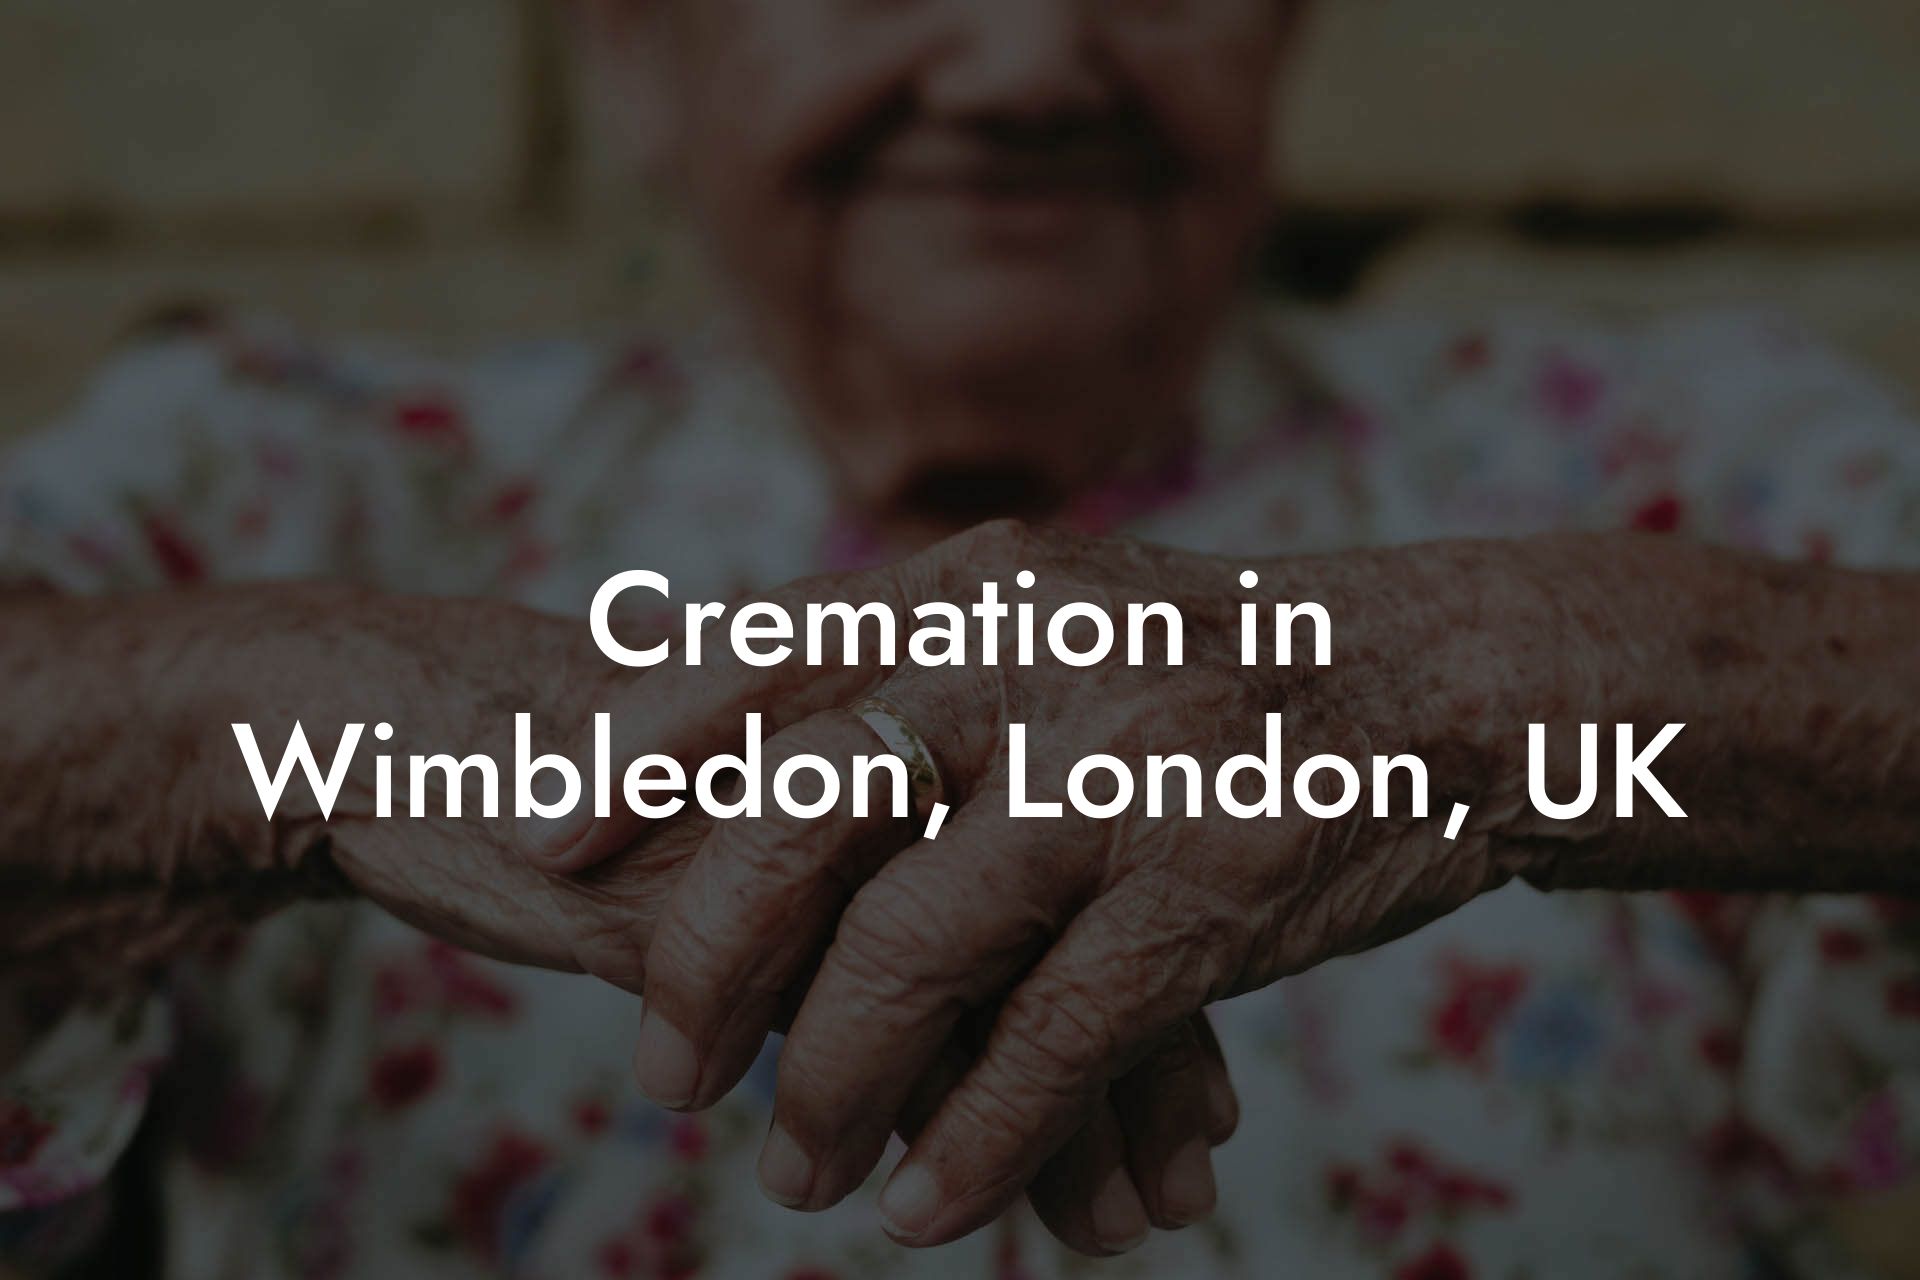 Cremation in Wimbledon, London, UK